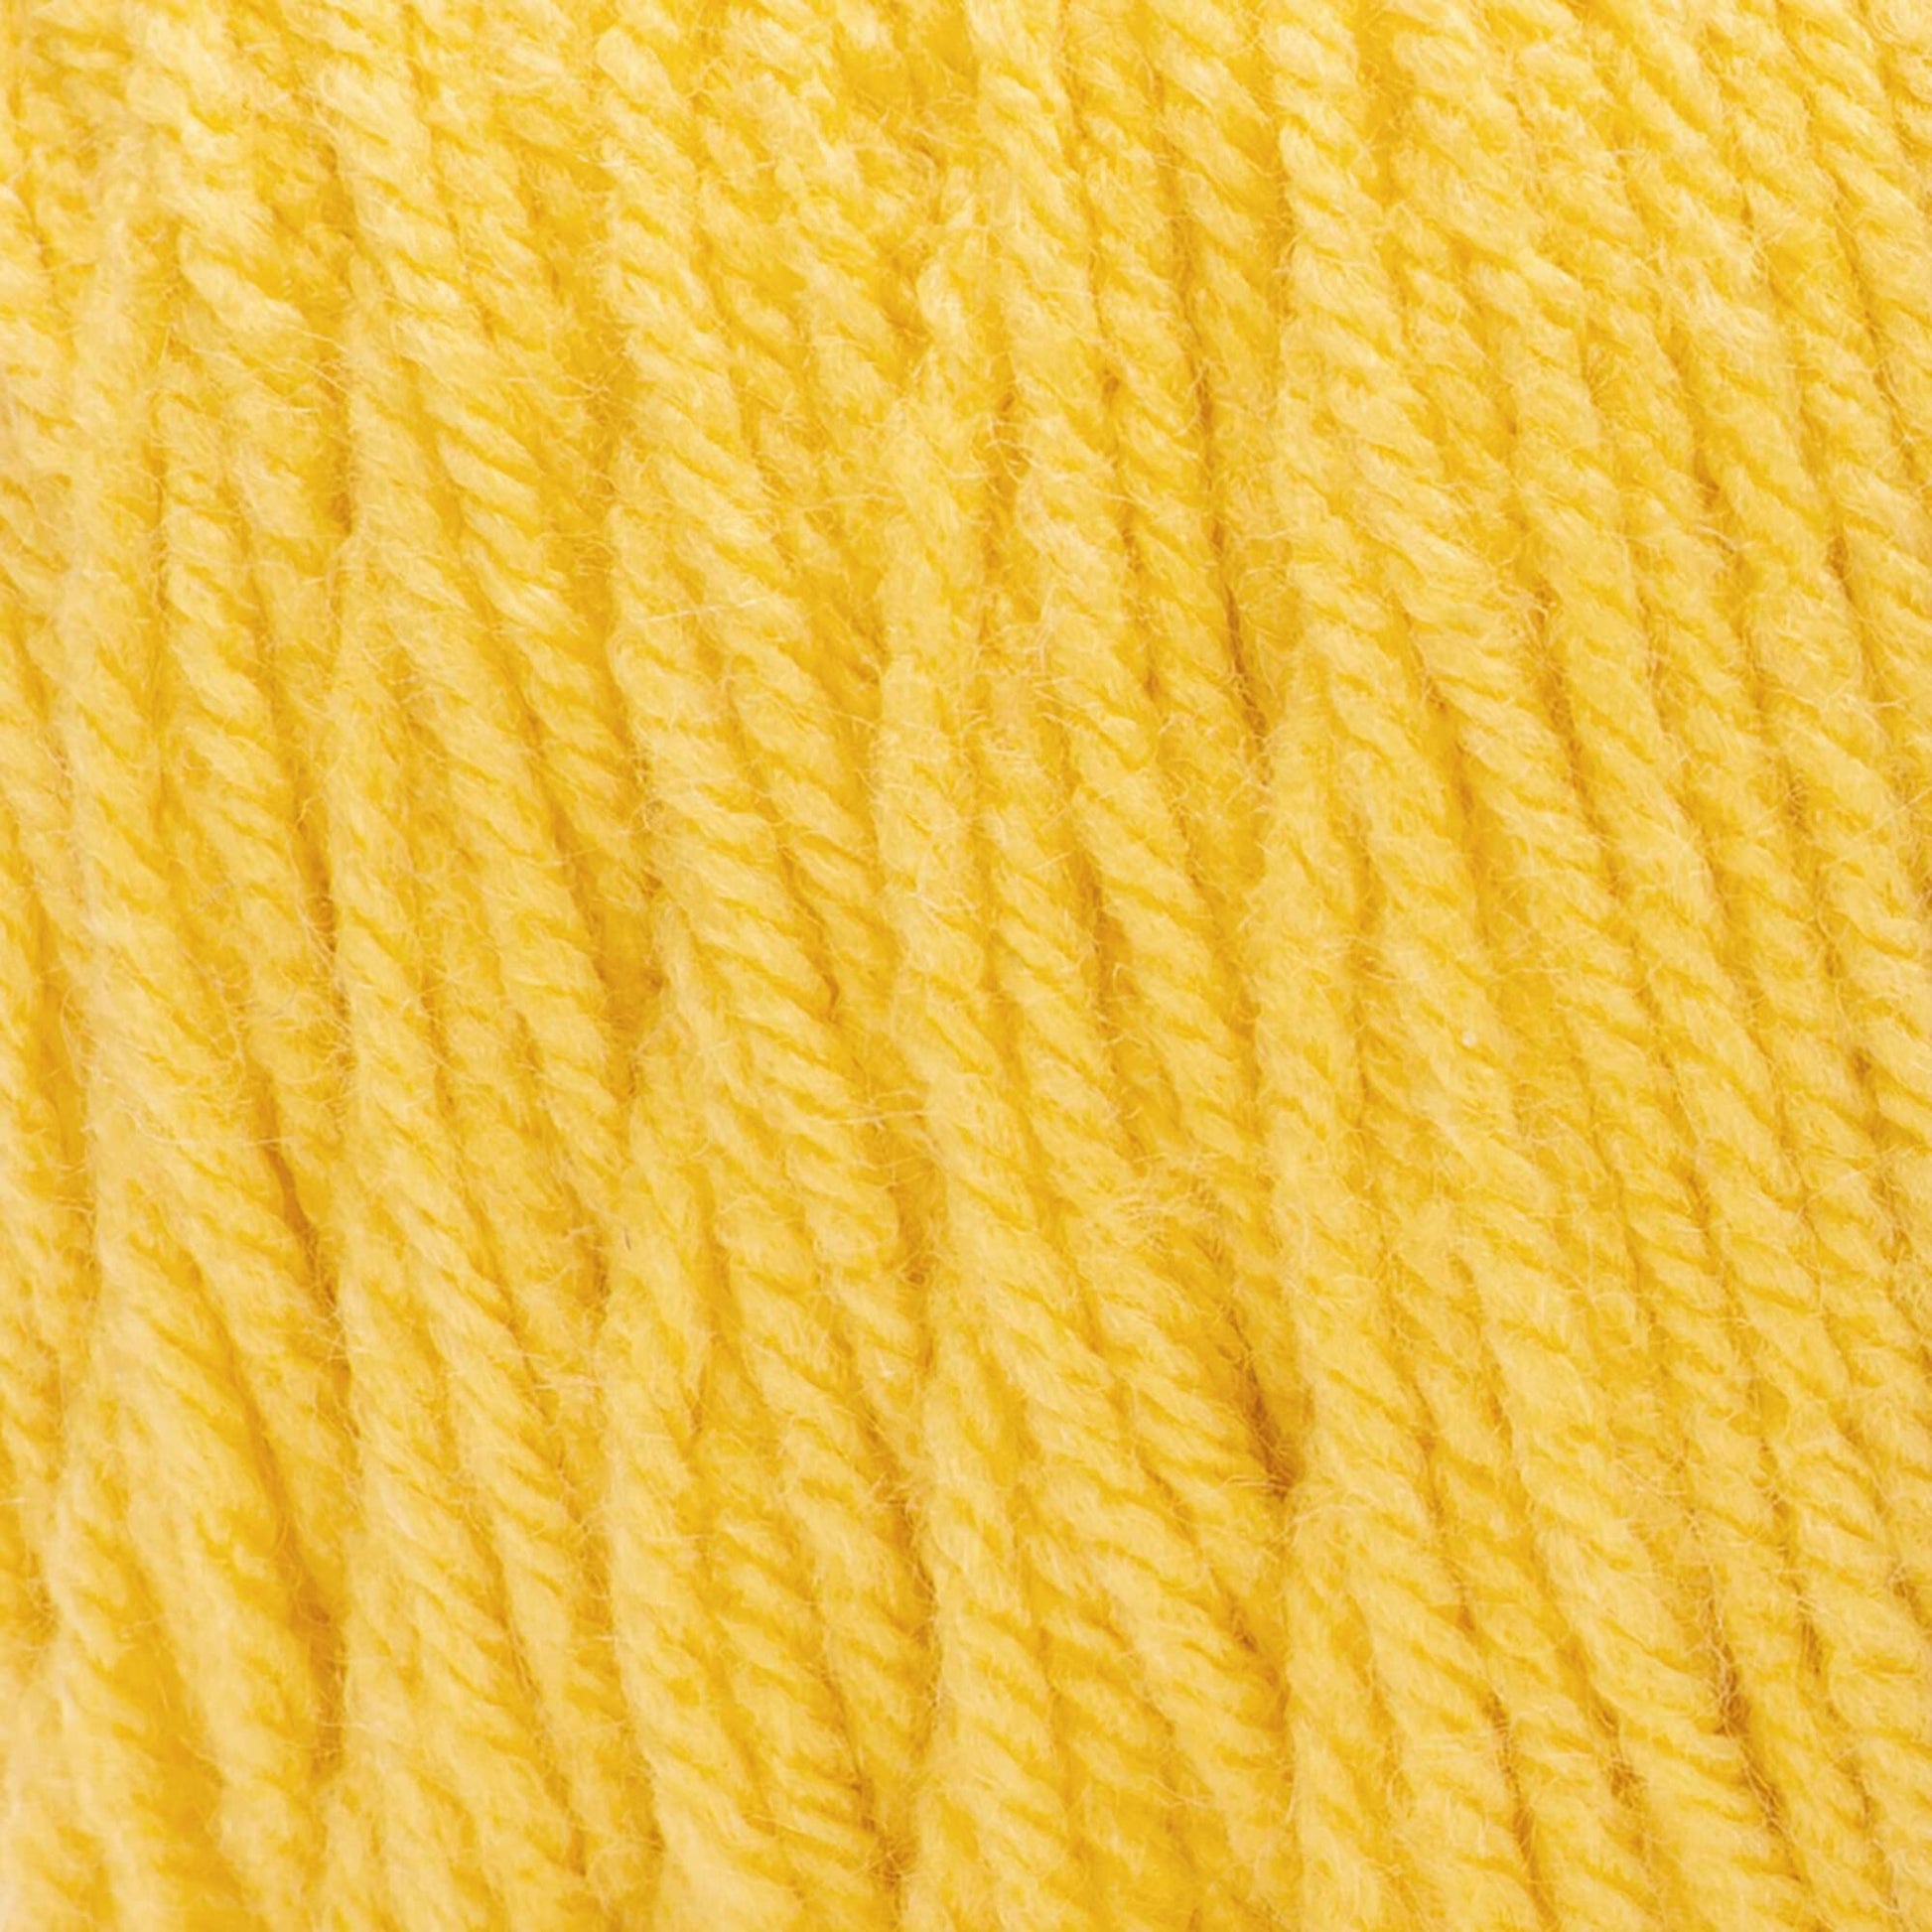 Bernat Premium Yarn - Clearance Shades*